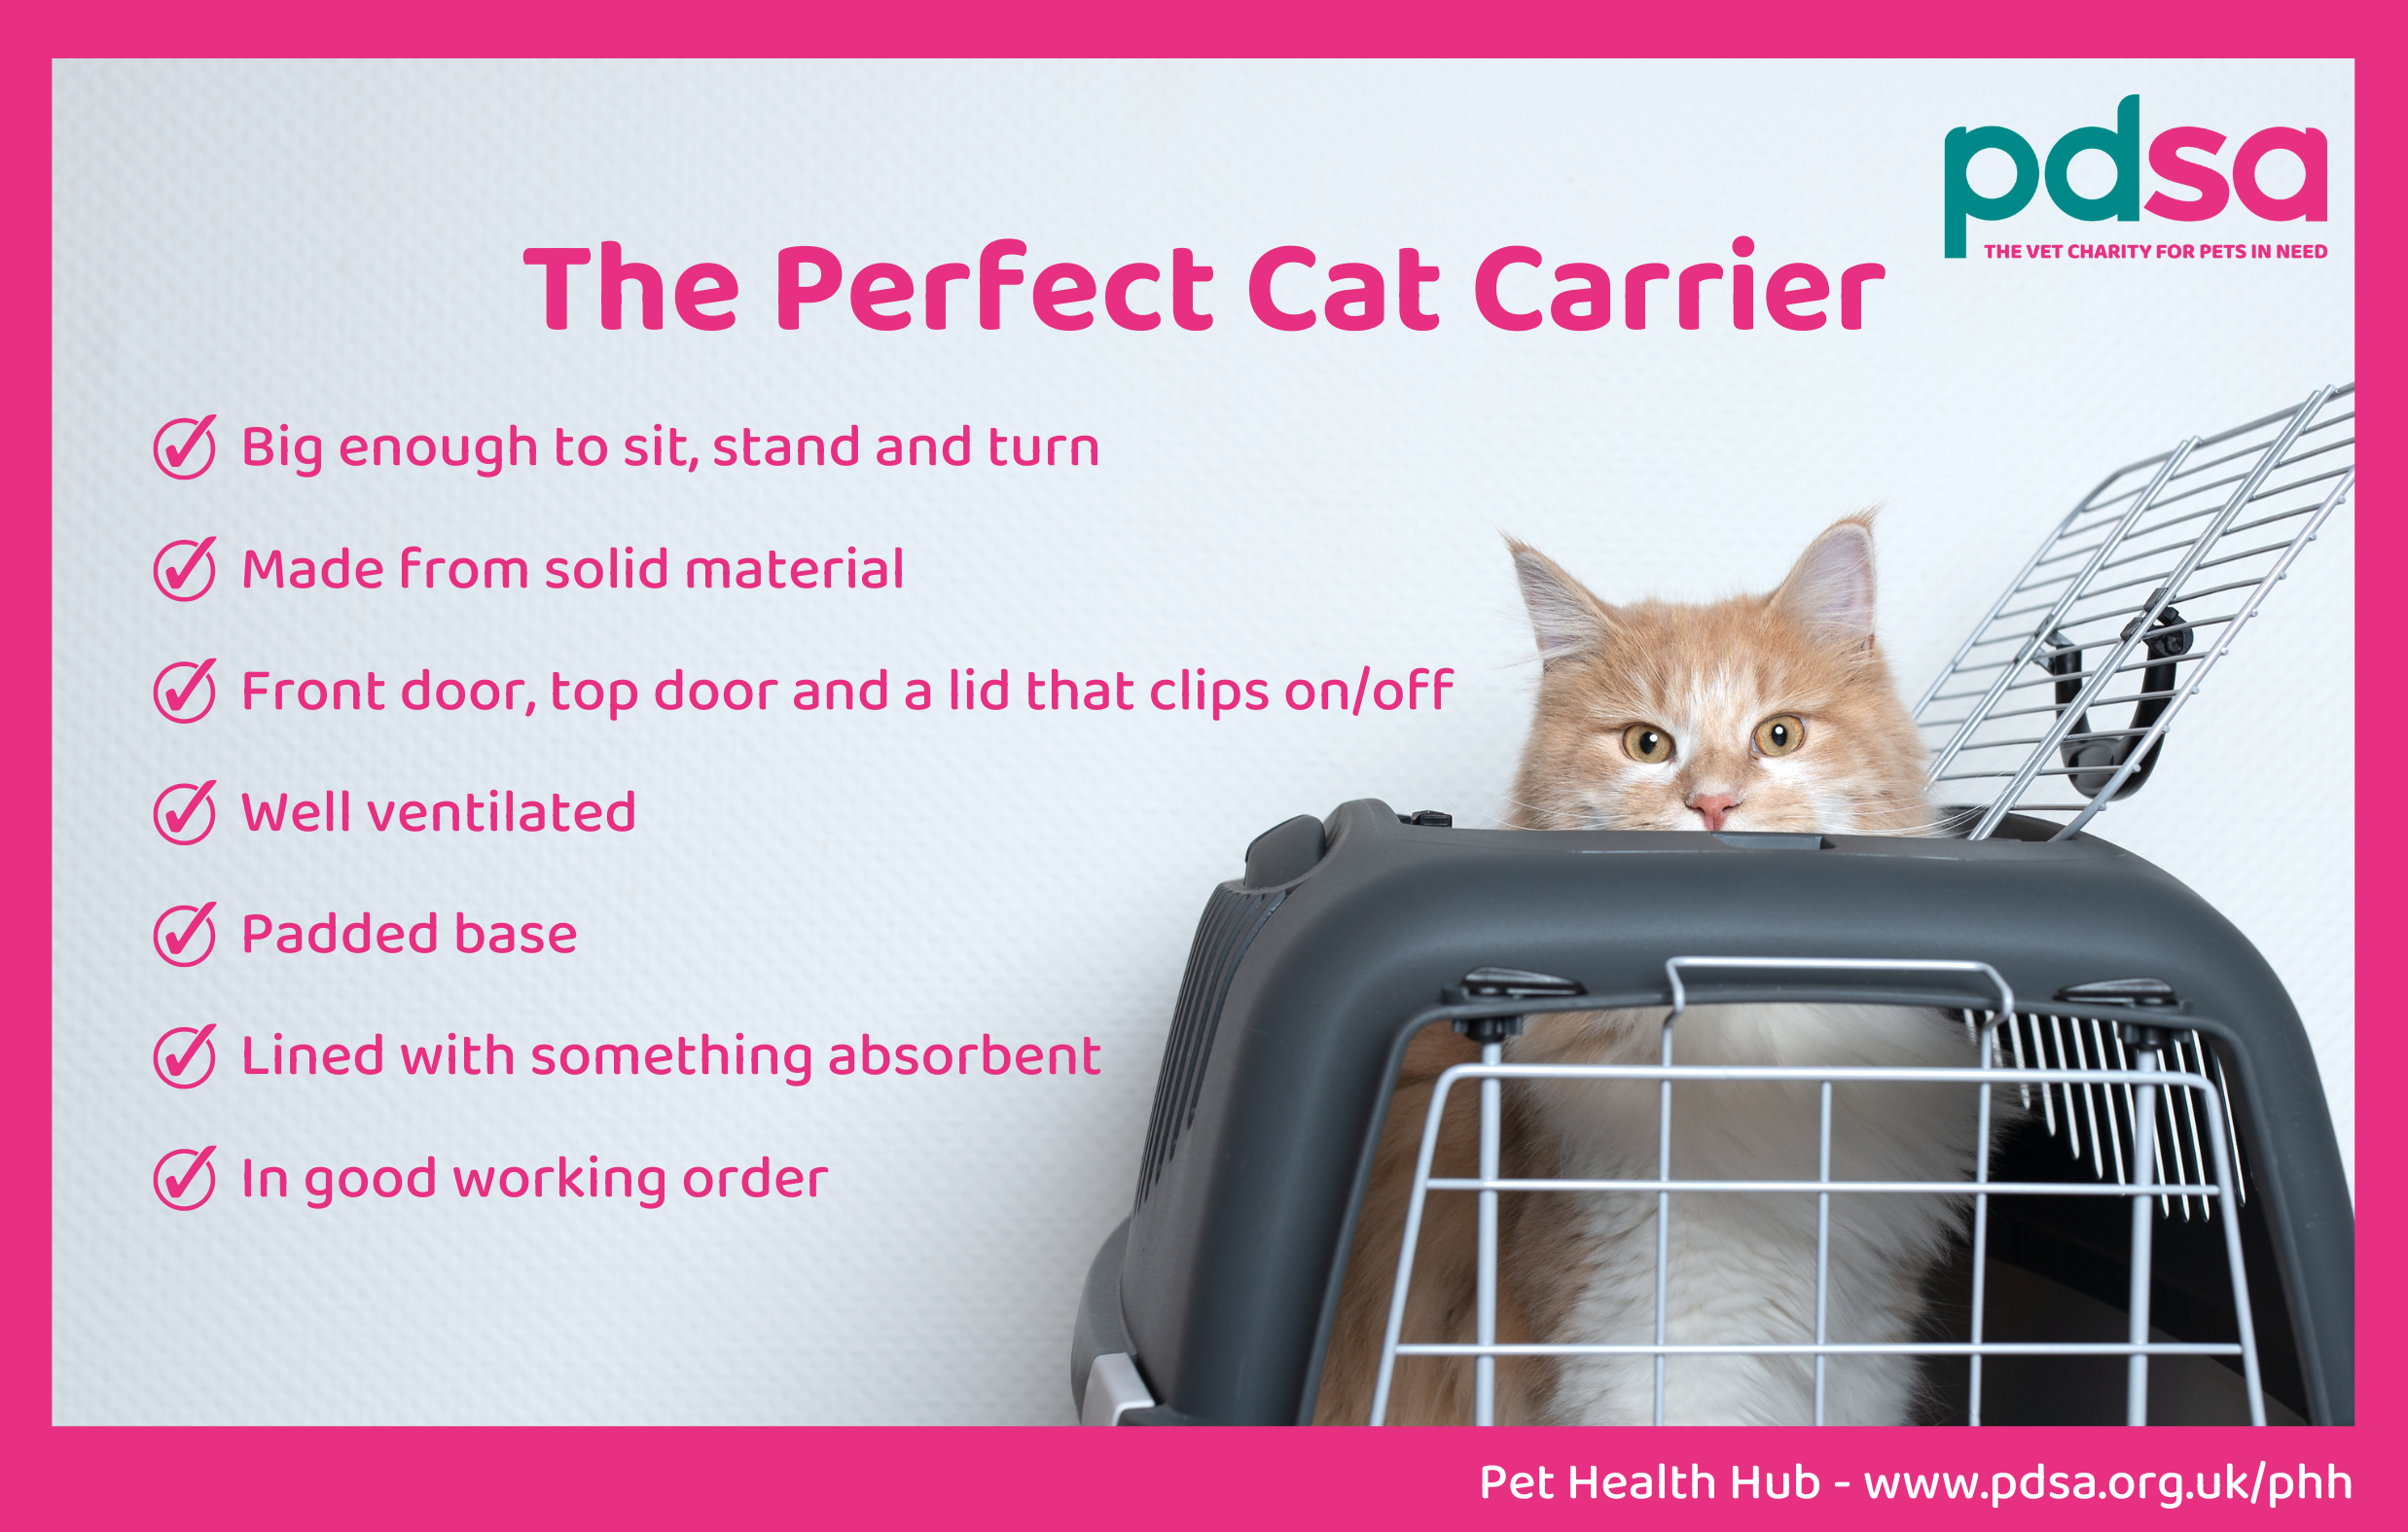 https://www.pdsa.org.uk/media/13363/the-perfect-cat-carrier-1.png